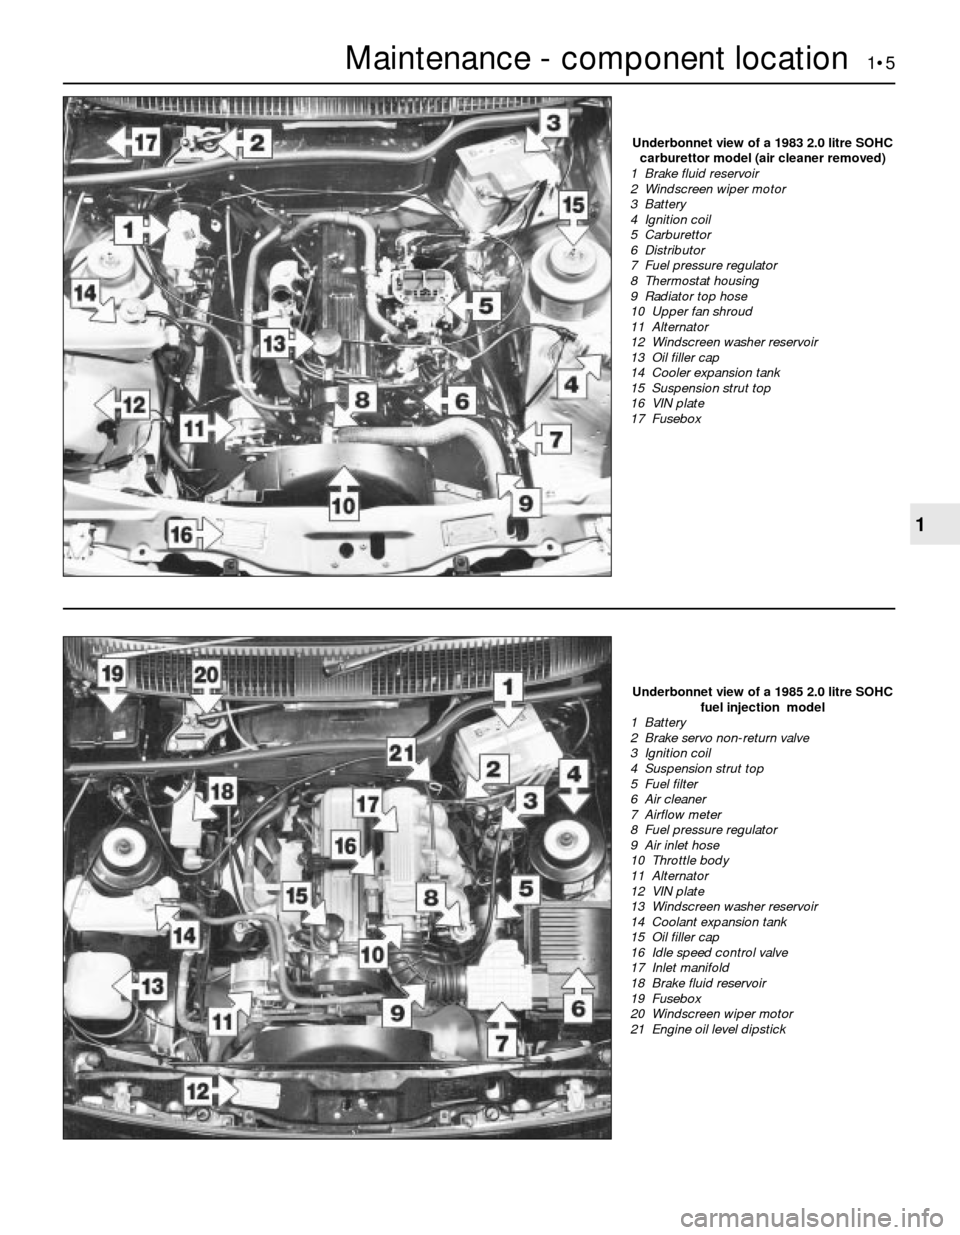 FORD SIERRA 1987 2.G Routine Manintenance And Servicing Workshop Manual Maintenance - component location  1•5
1
Underbonnet view of a 1985 2.0 litre SOHC
fuel injection  model
1  Battery
2  Brake servo non-return valve
3  Ignition coil
4  Suspension strut top
5  Fuel fi